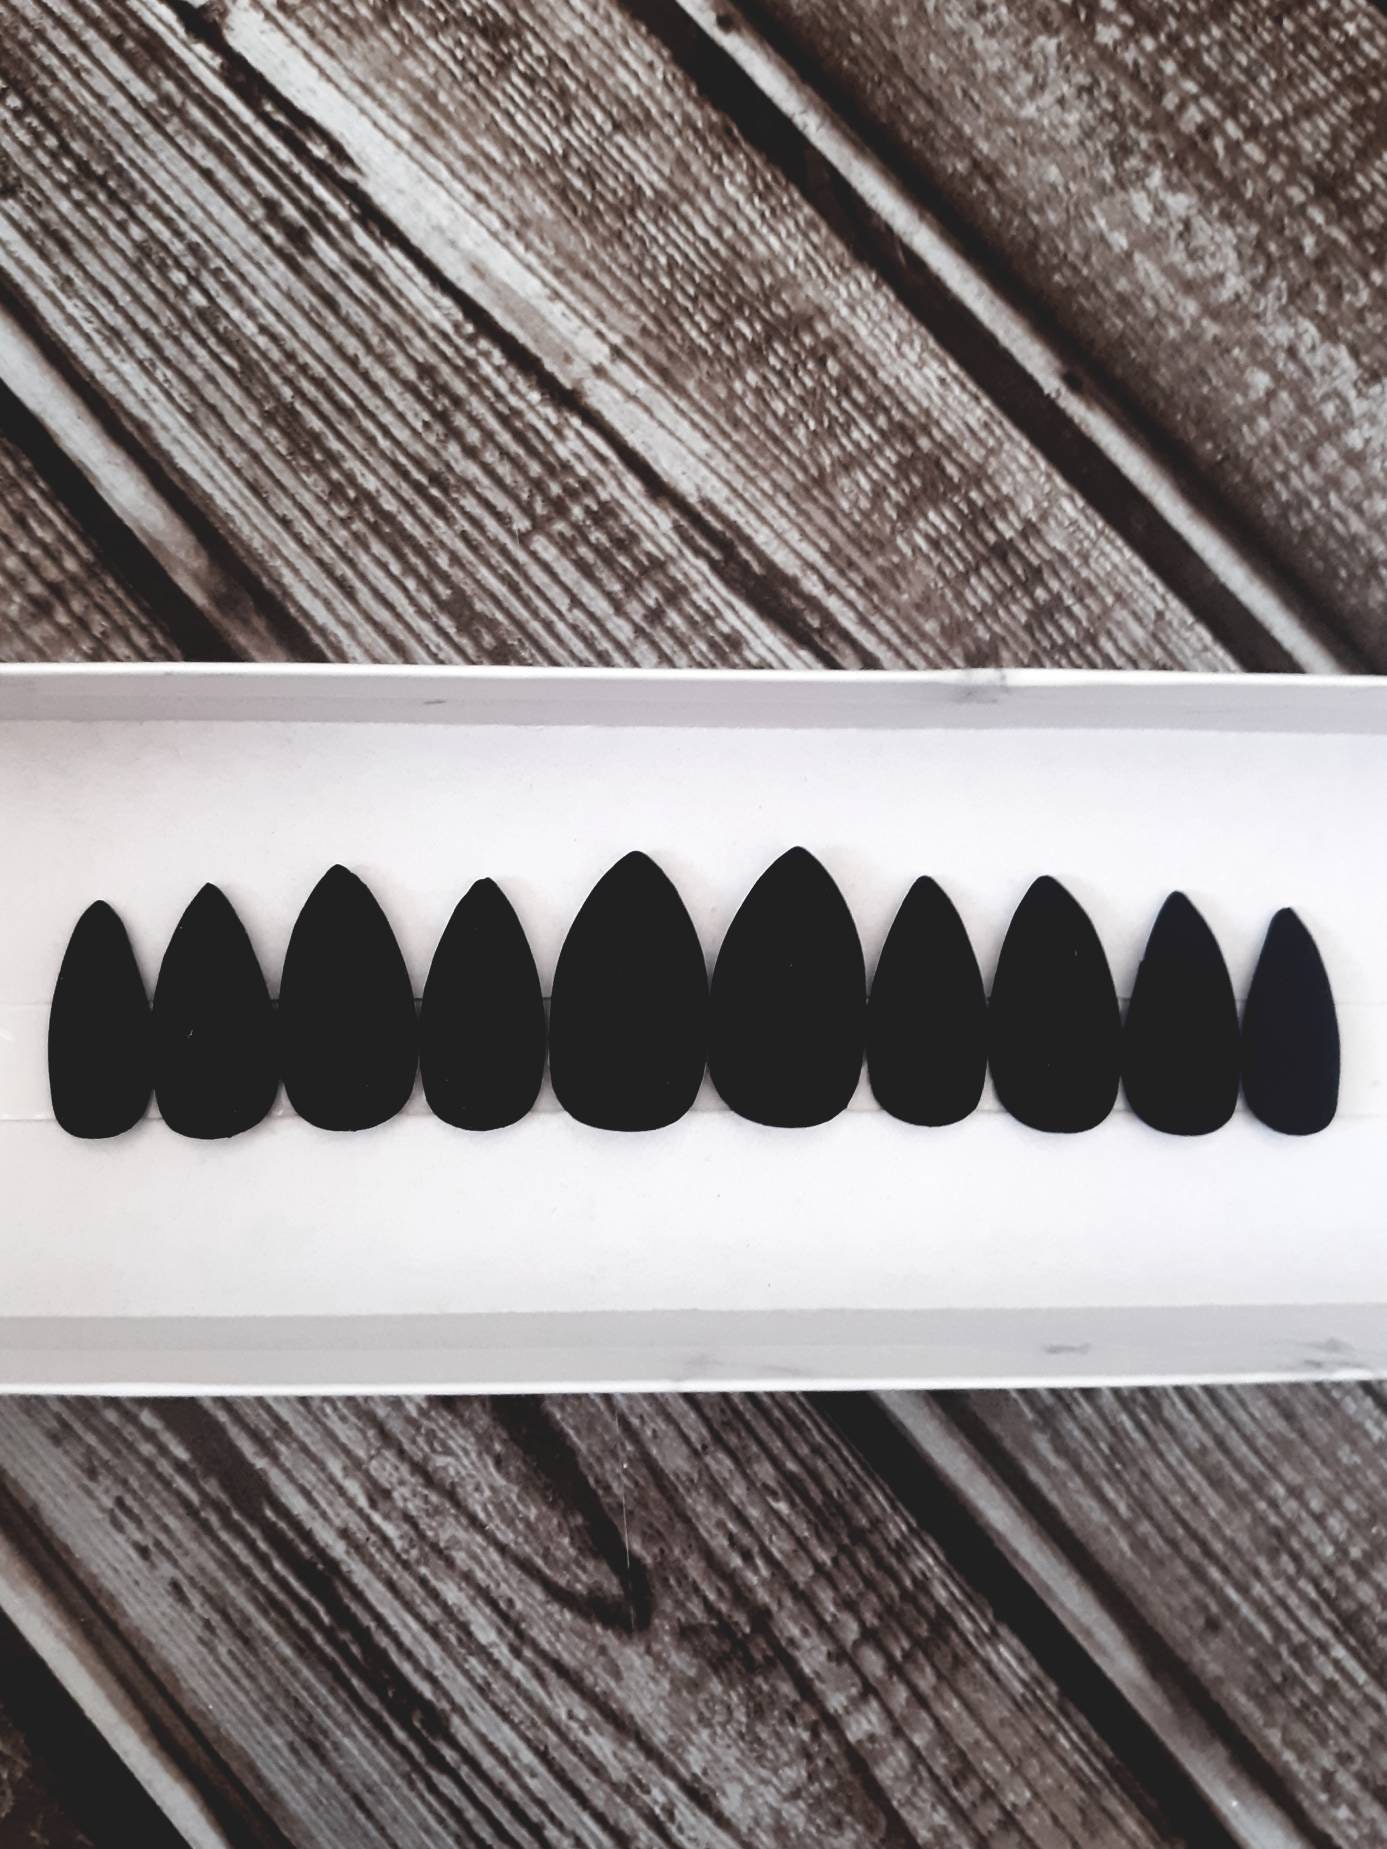 Medium Rhinestone Acrylic Nails Stiletto Black Black Design, Full Cover,  Sharp Glossy Finish For Tarered Artifical Dark Decoration Prud22 From  Prudencha, $35.79